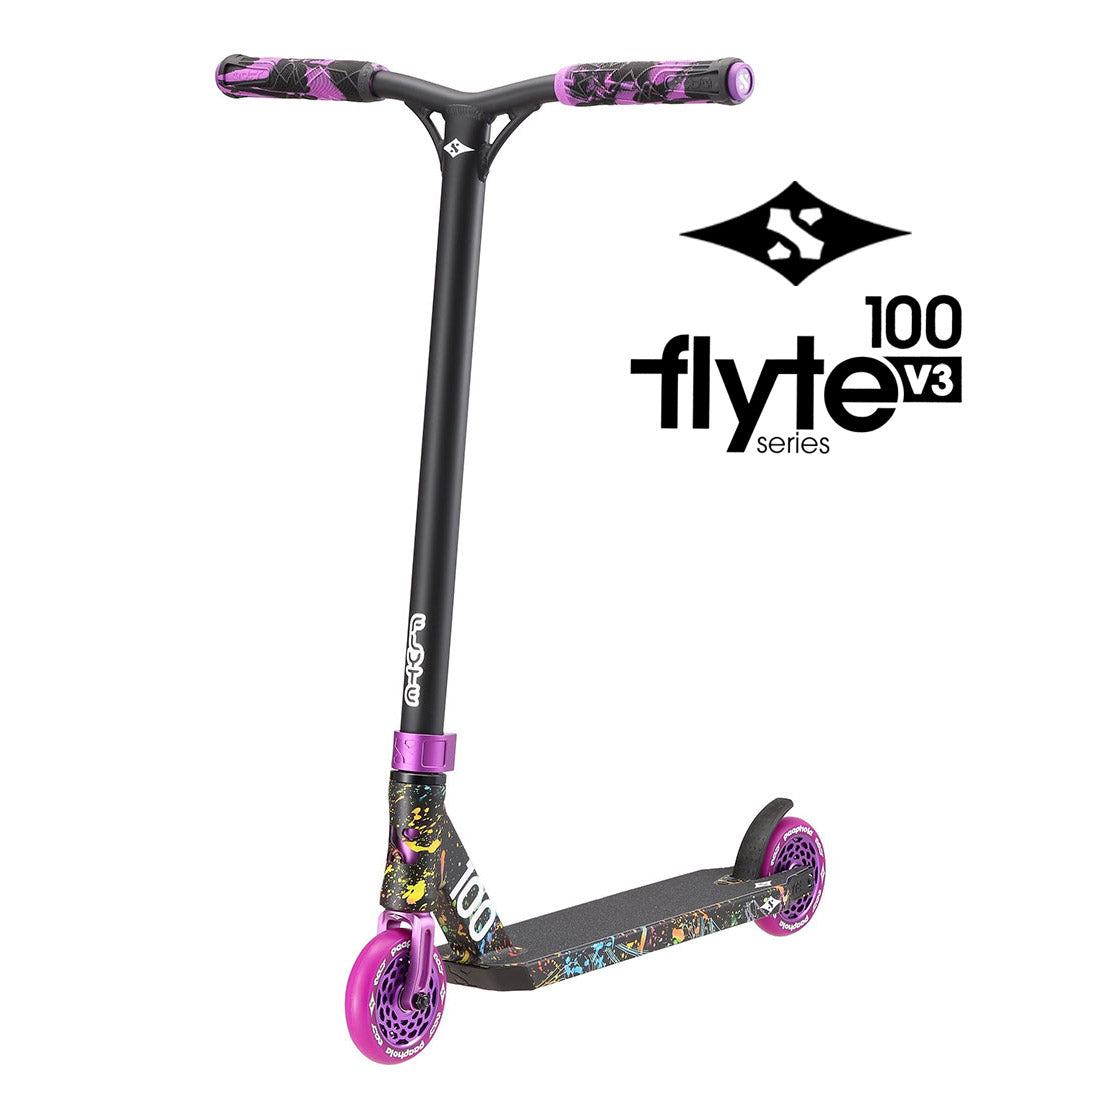 Sacrifice Flyte 100 V3 - Paint Splat Scooter Completes Trick